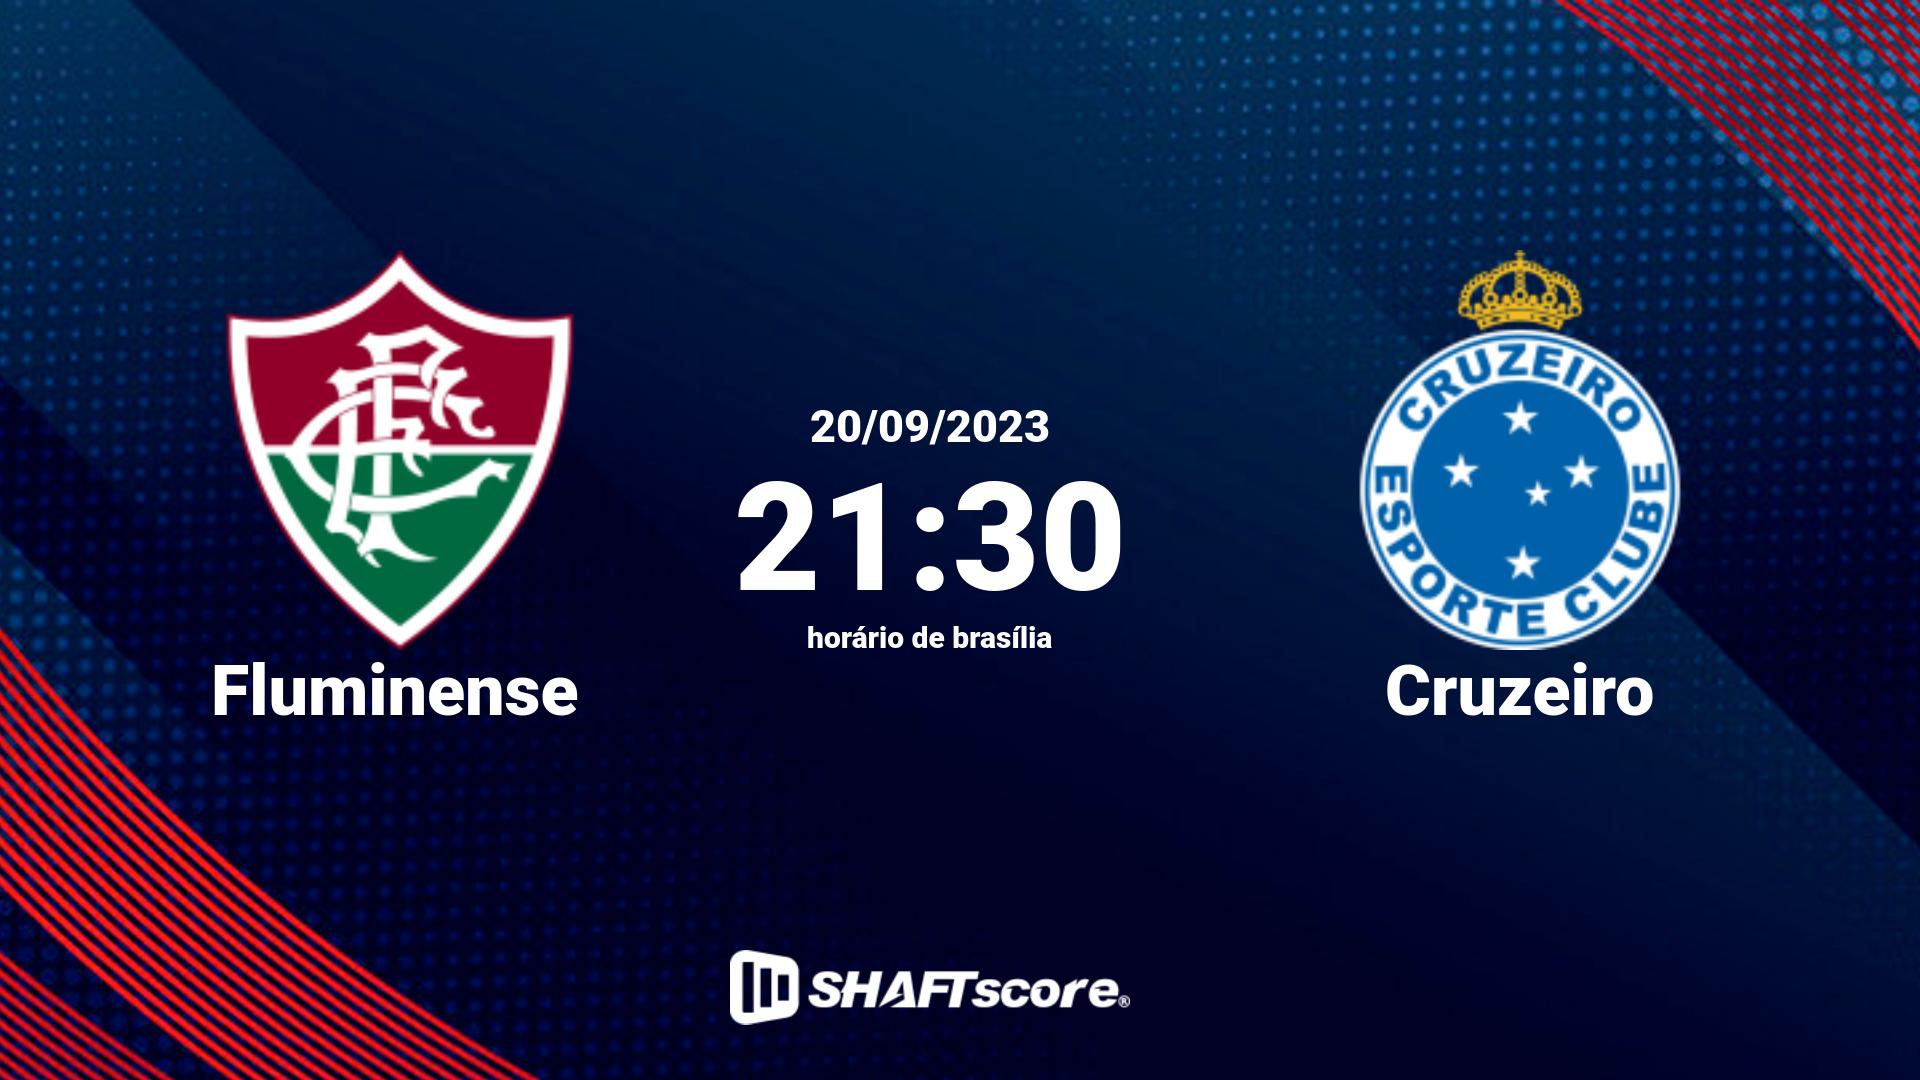 Estatísticas do jogo Fluminense vs Cruzeiro 20.09 21:30